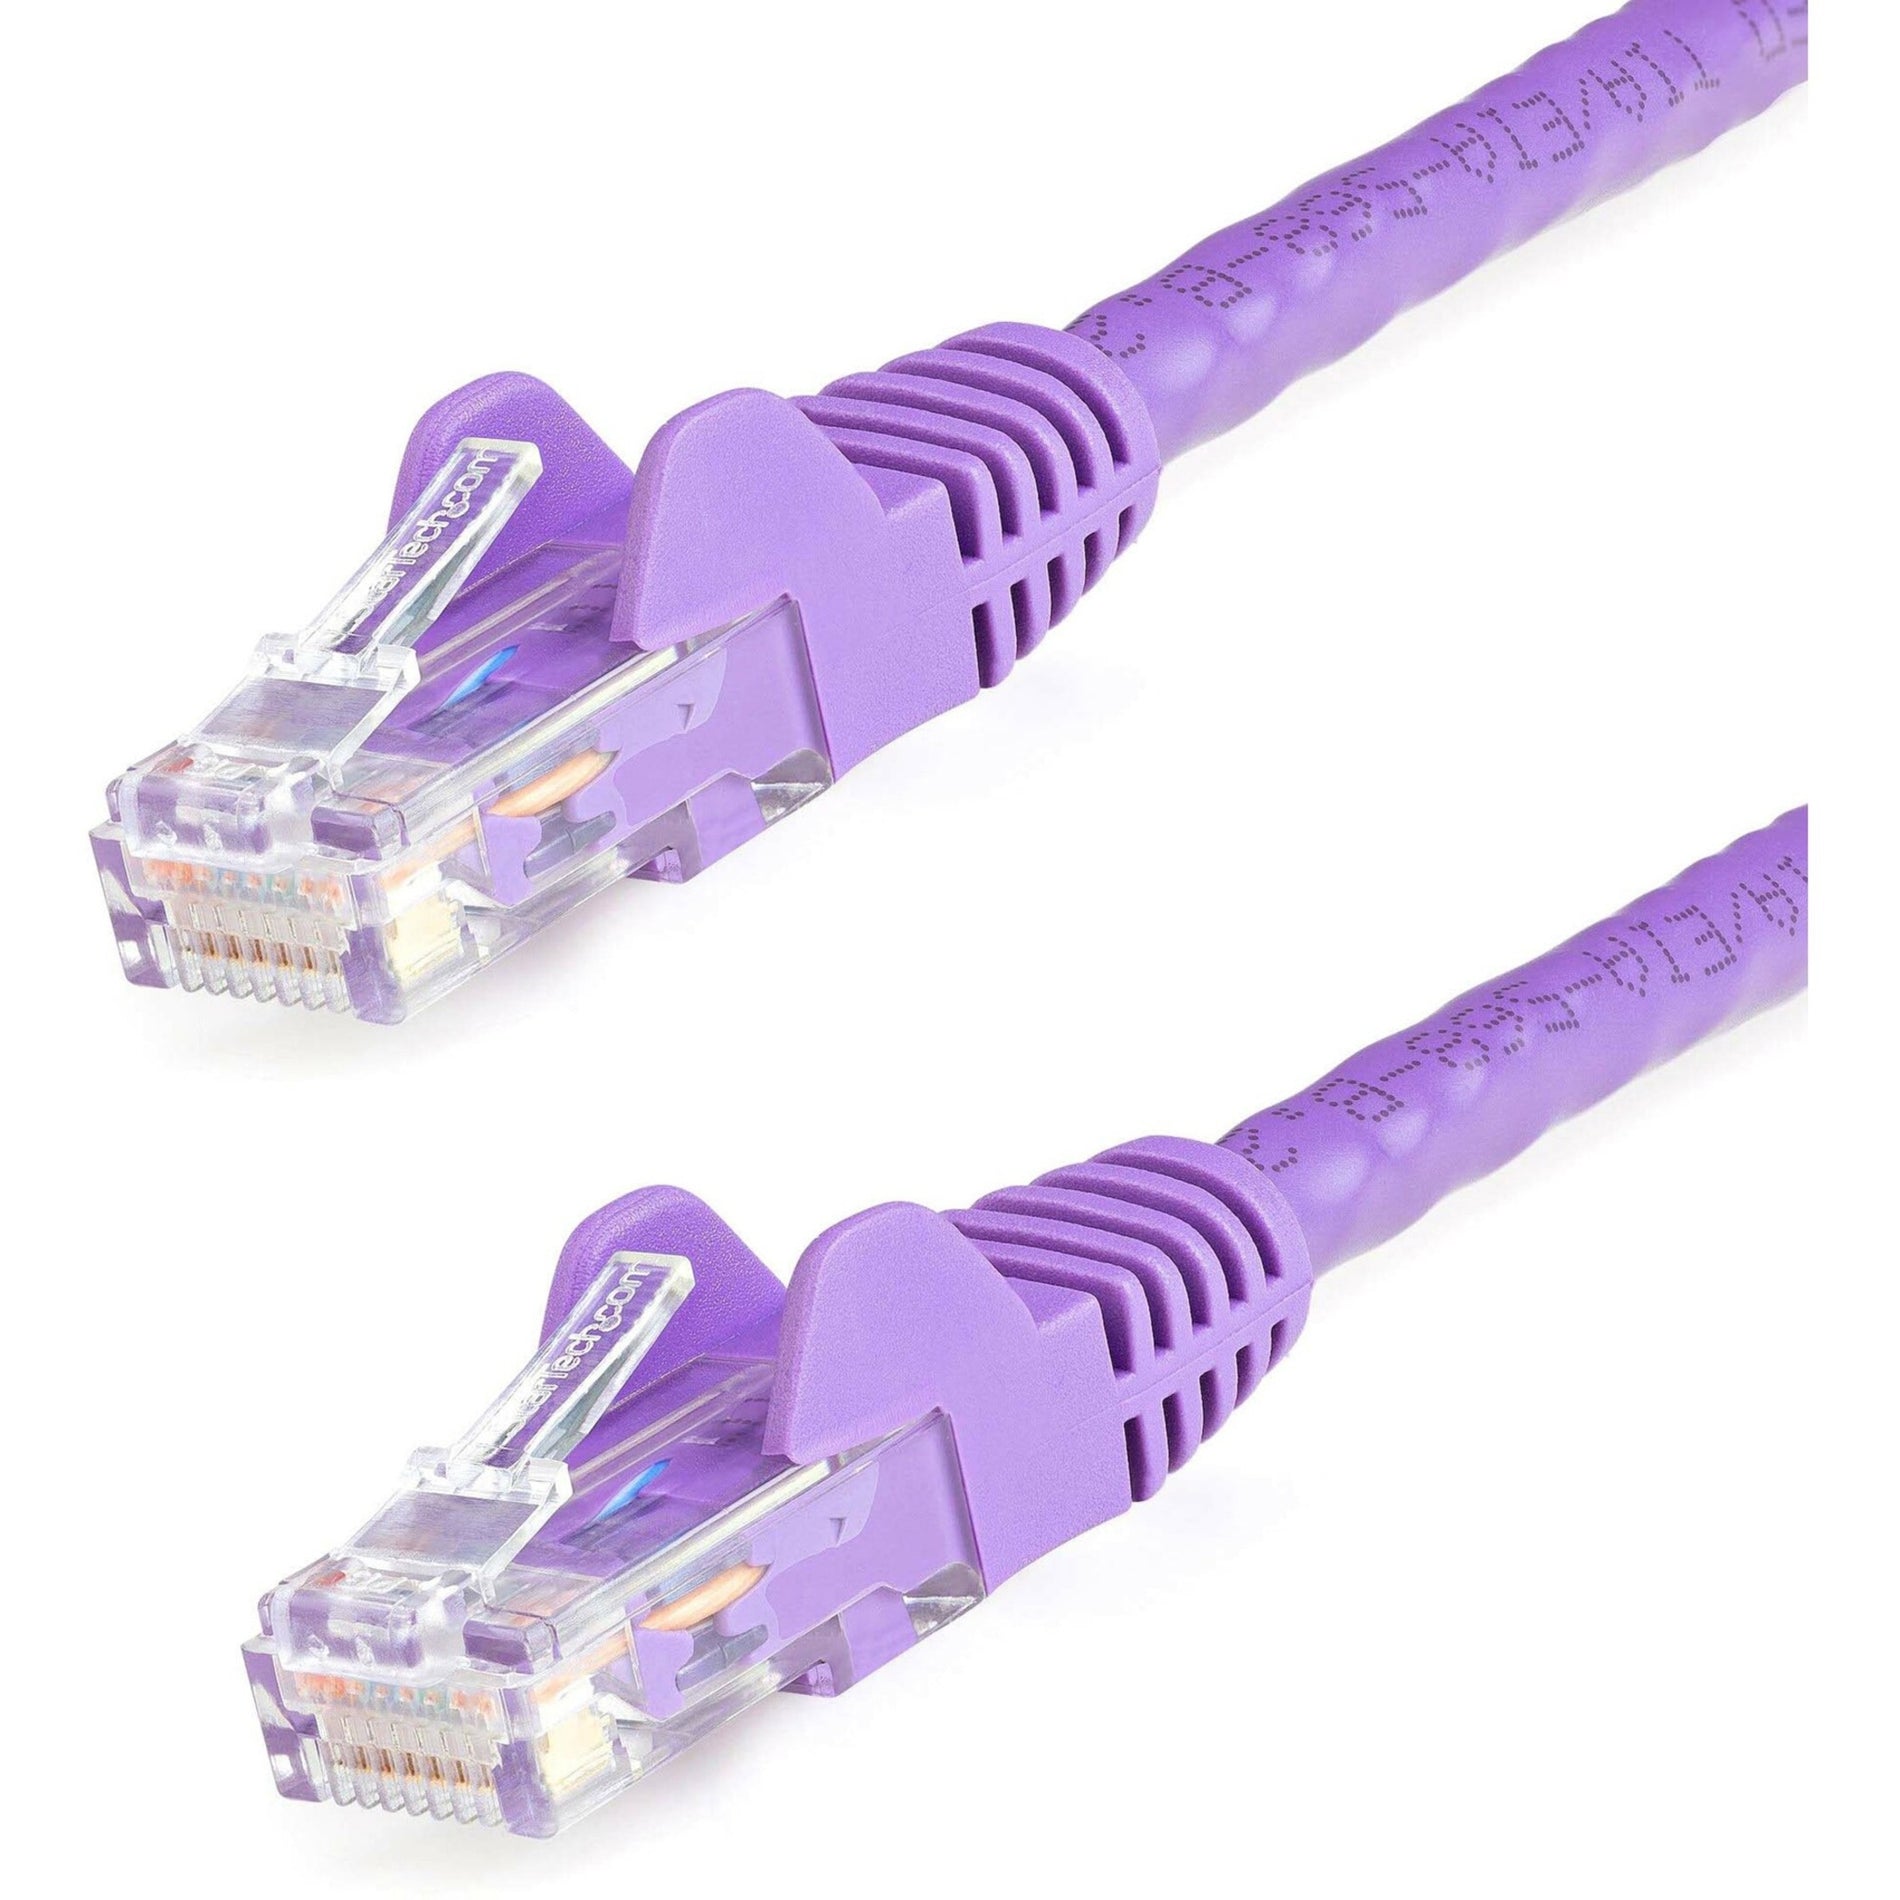 StarTech.com N6PATCH125PL Cat6 Patch Cable, 125ft Purple Ethernet Cable with Snagless RJ45 Connectors